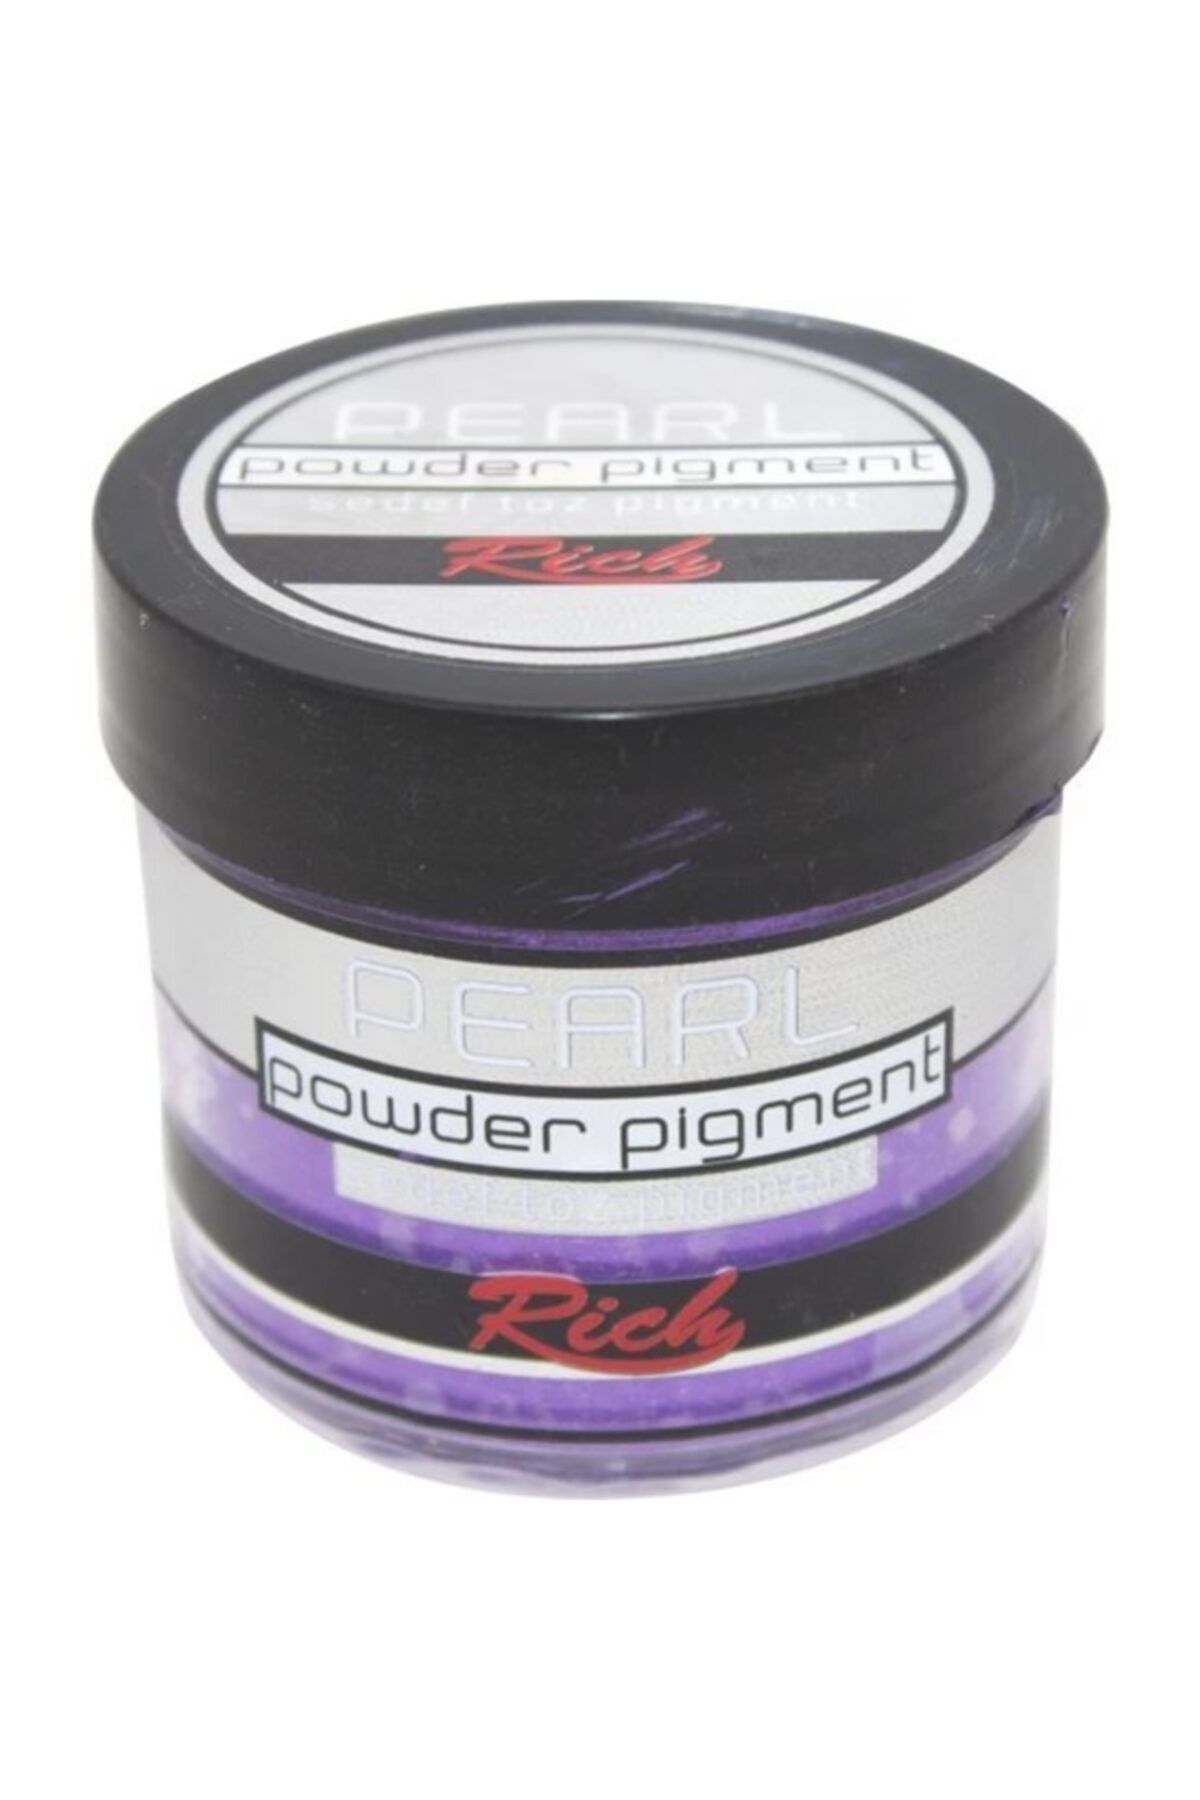 Rich Sedef Pearl Powder Pigment 60cc 11024-violet